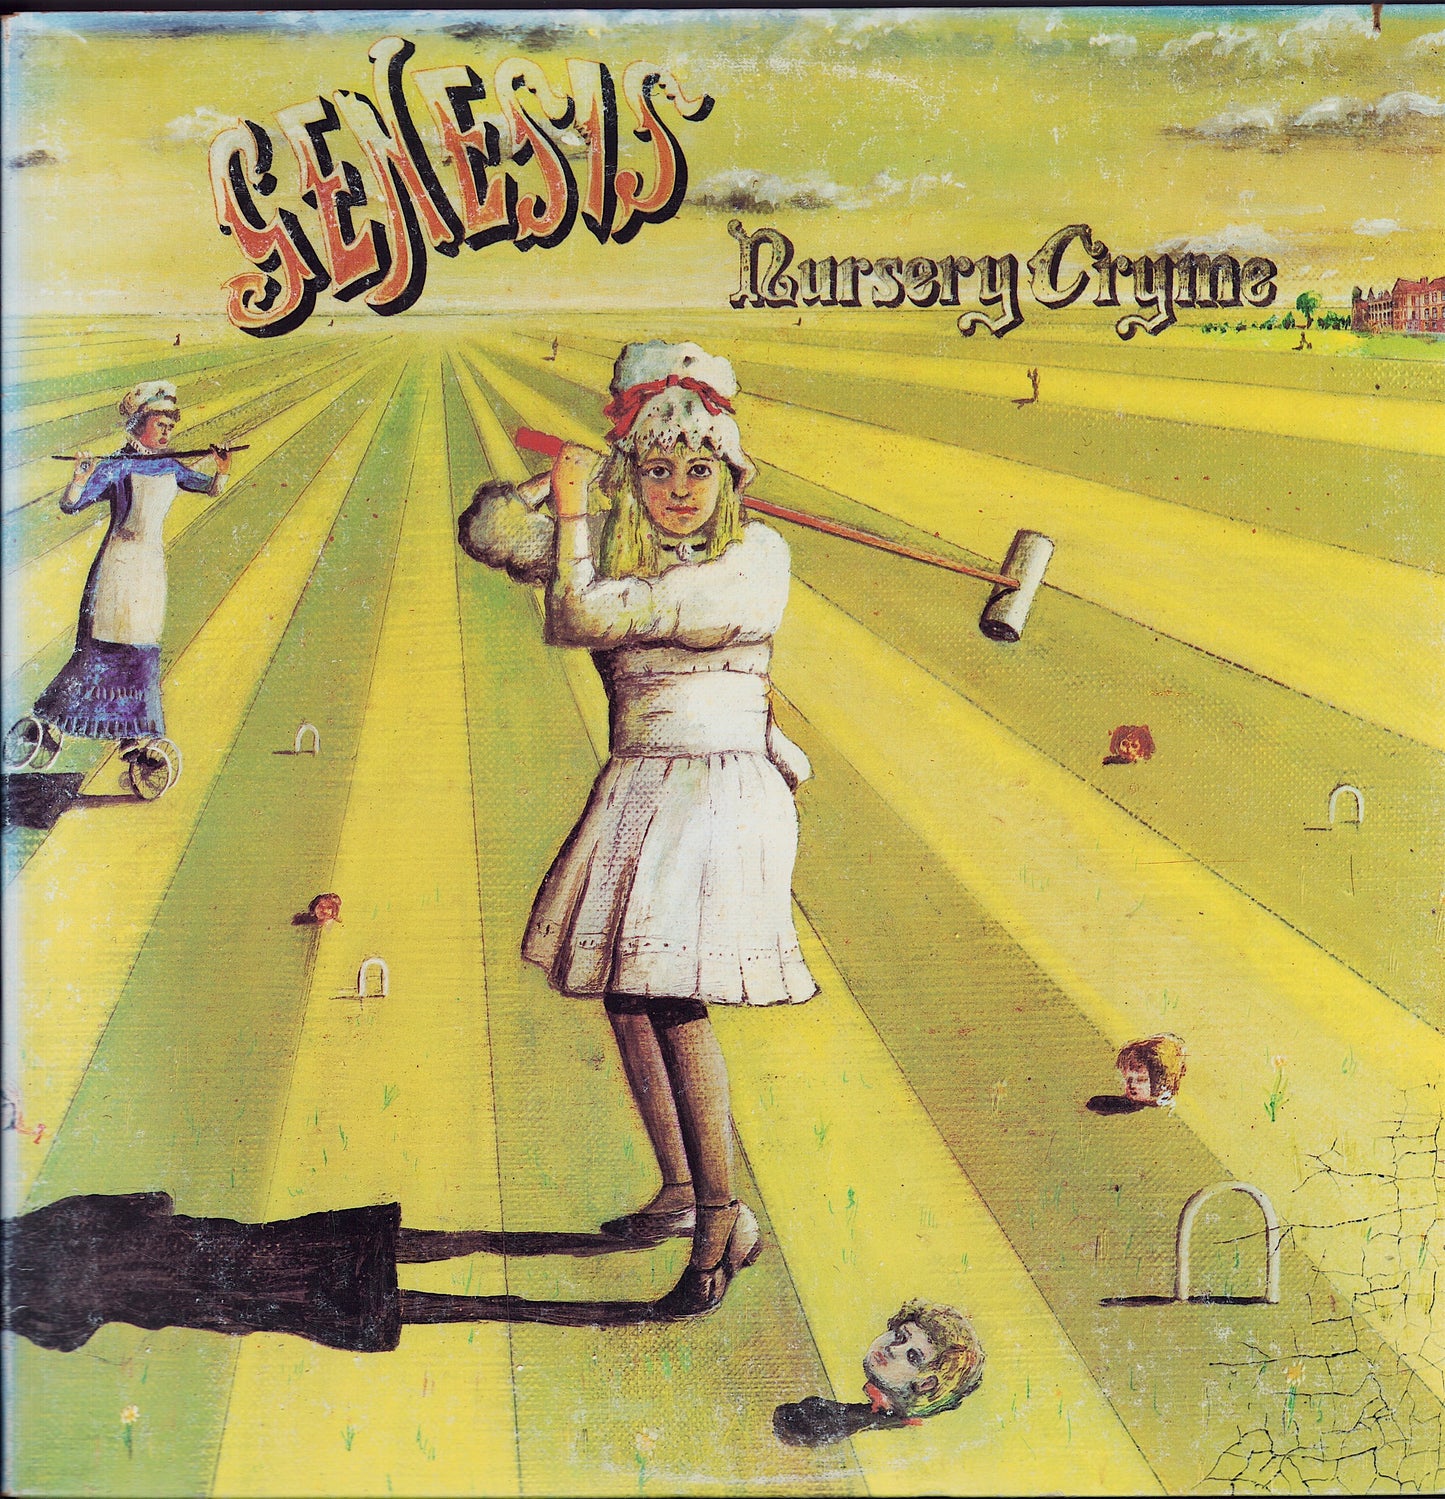 Genesis ‎- Nursery Cryme (Vinyl LP) US